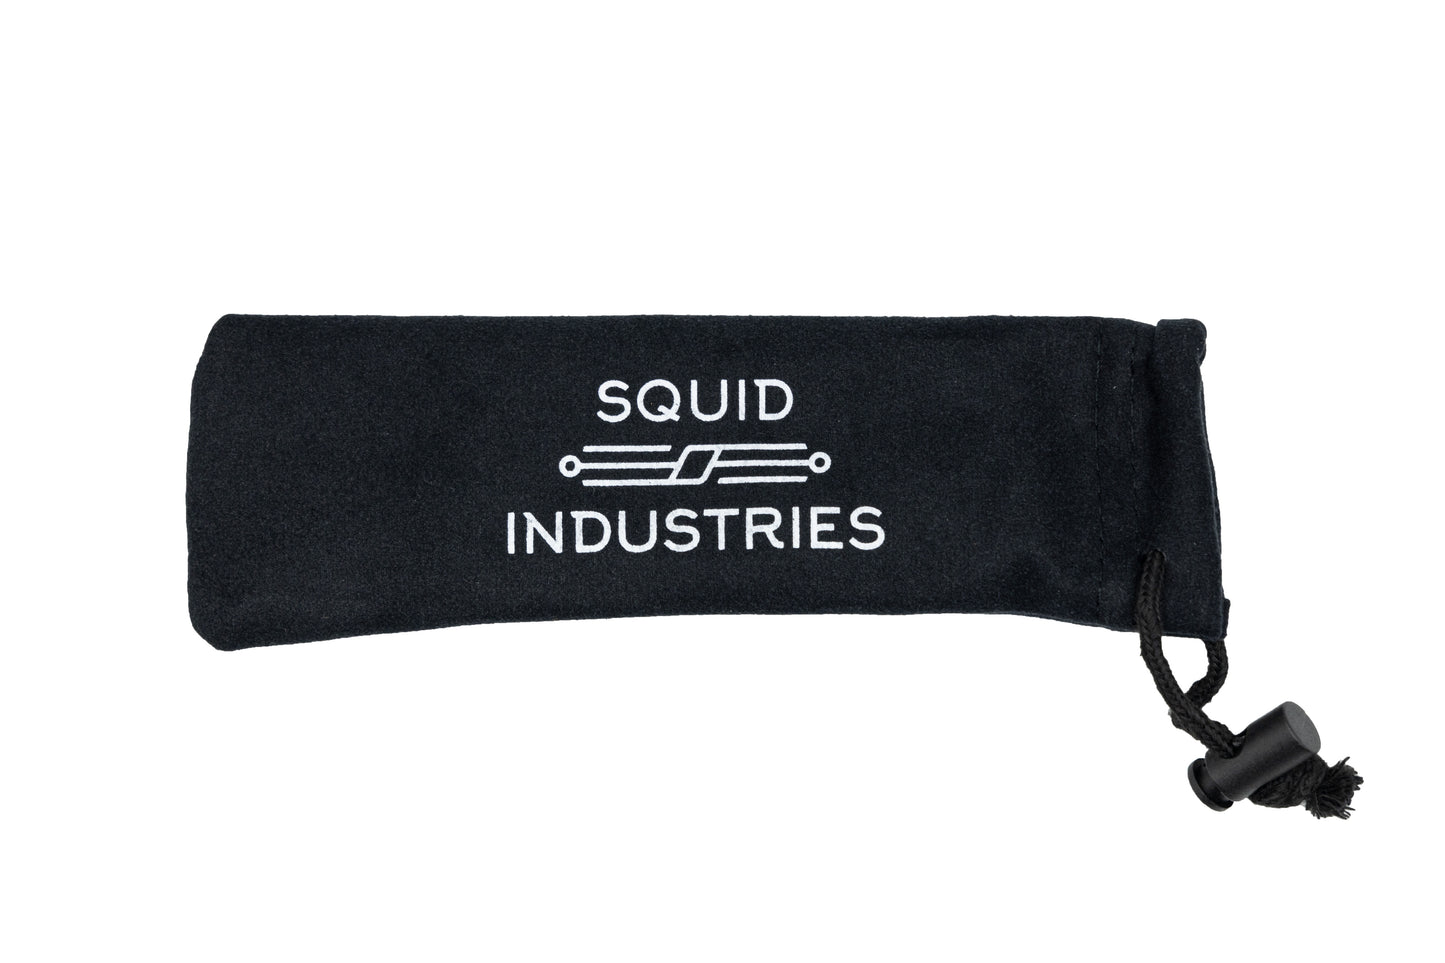 Squid Industries Pouch